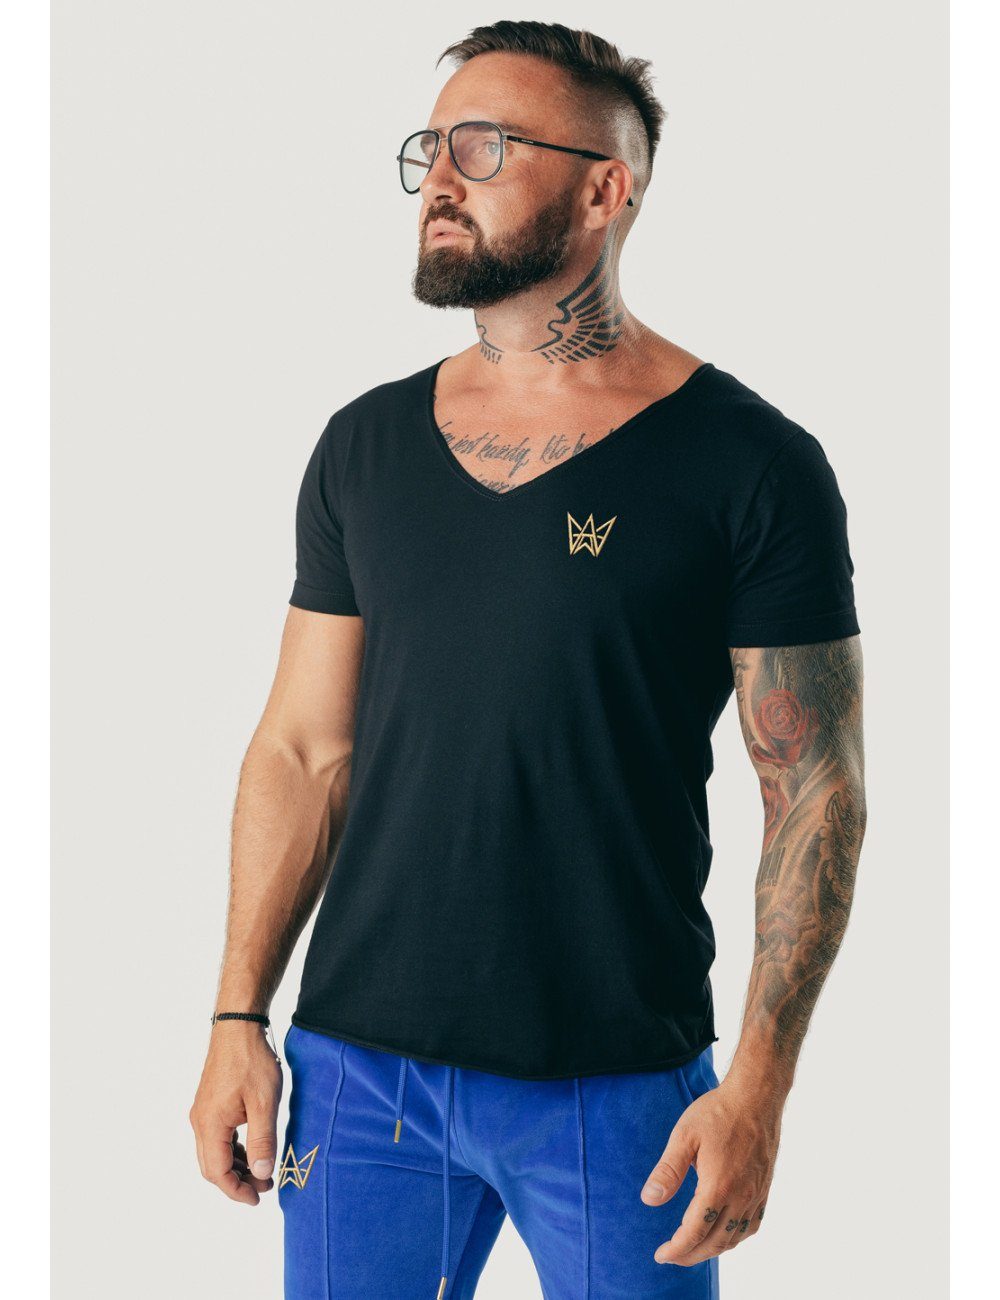 Logostrickerei Trendiges TRES V-Neck Schwarz Shirt T-Shirt mit AMIGOS